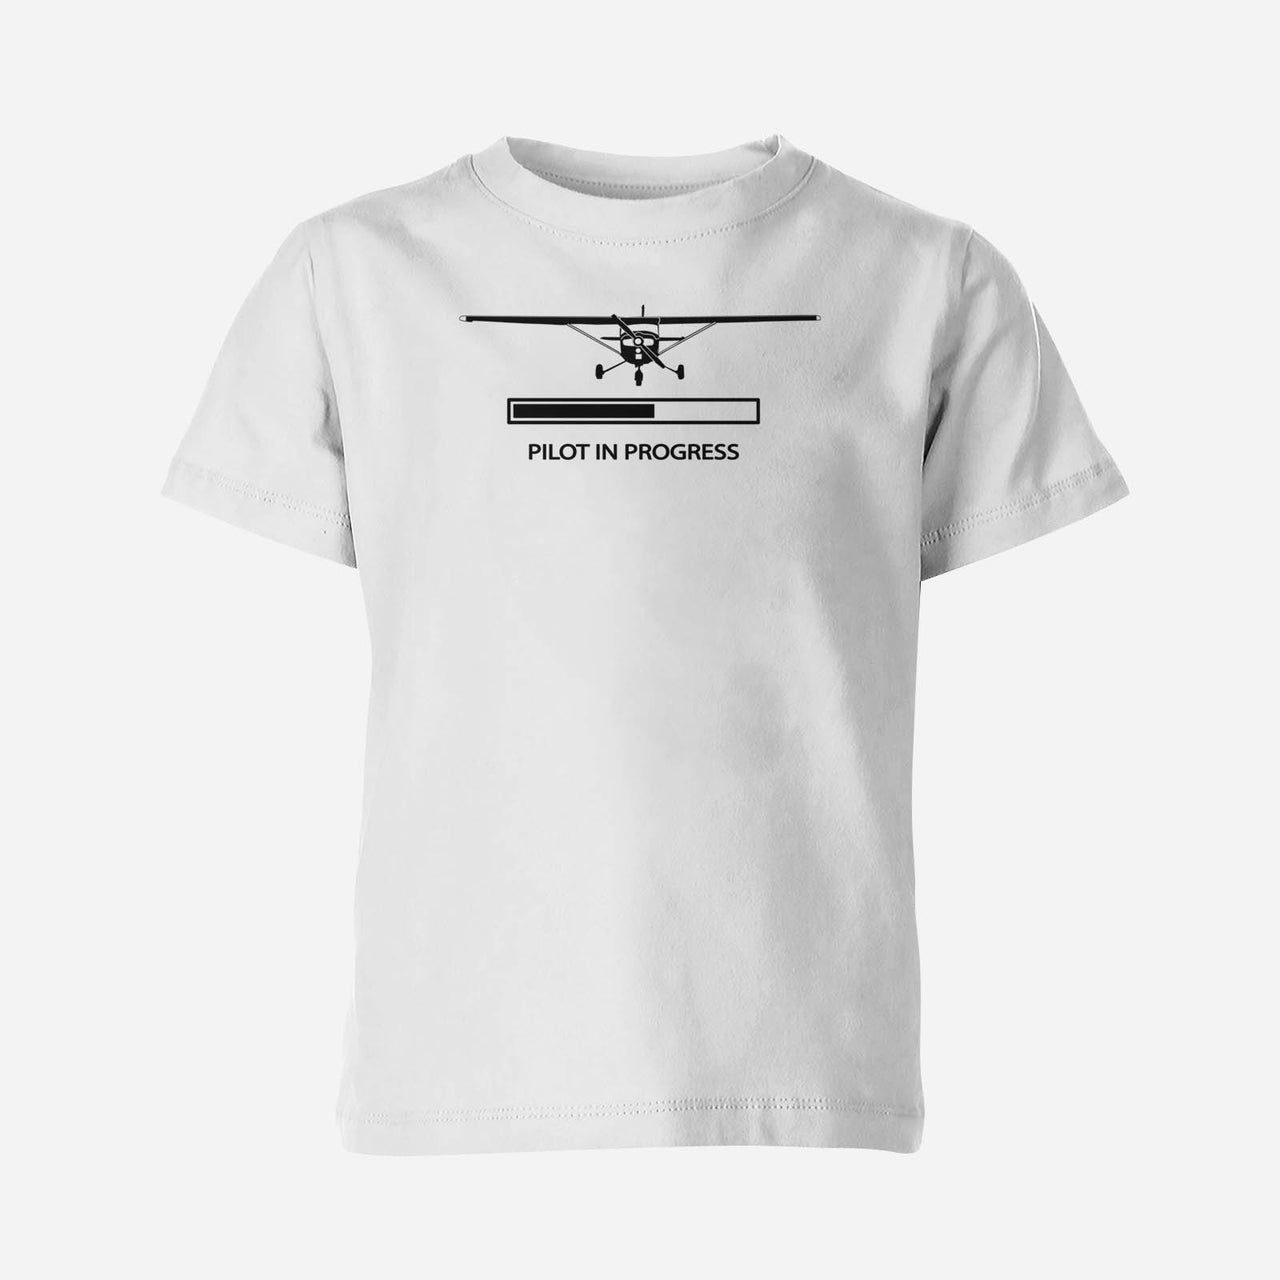 Pilot In Progress (Cessna) Designed Children T-Shirts